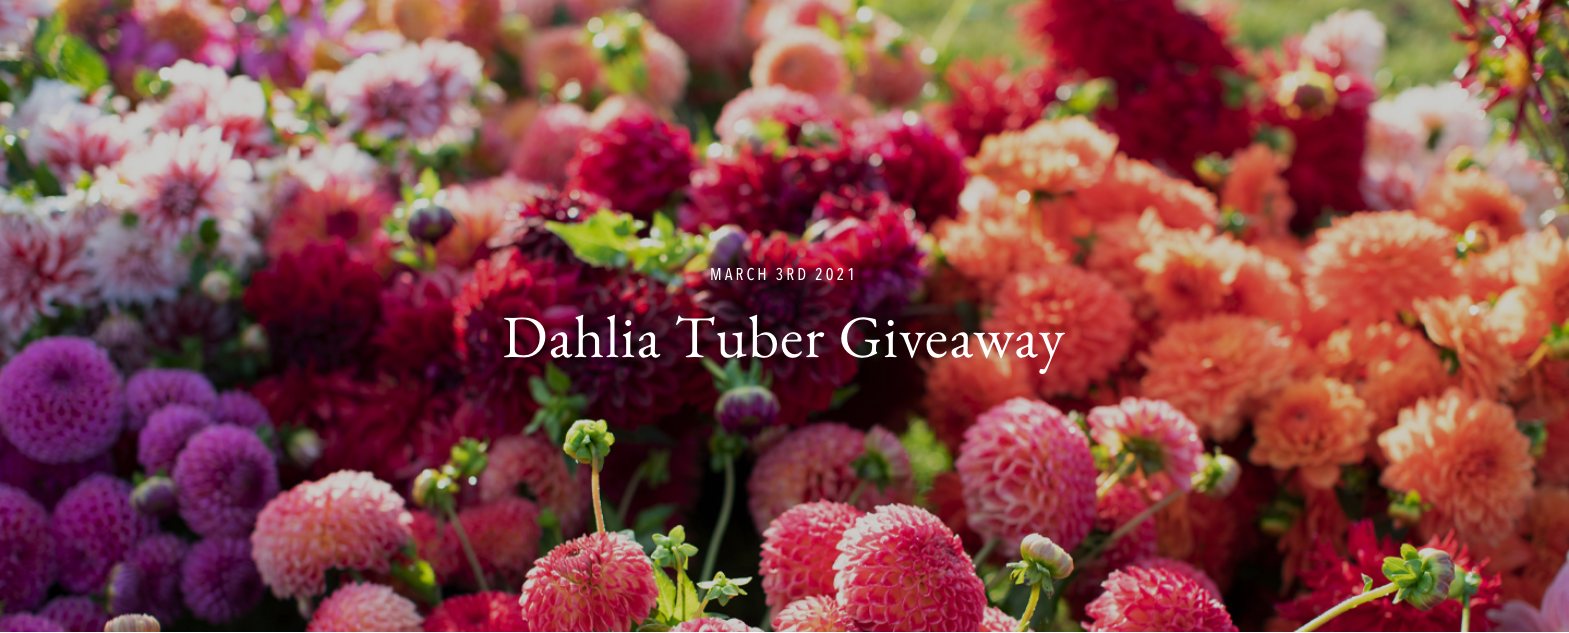 Dahlia Tuber Giveaway